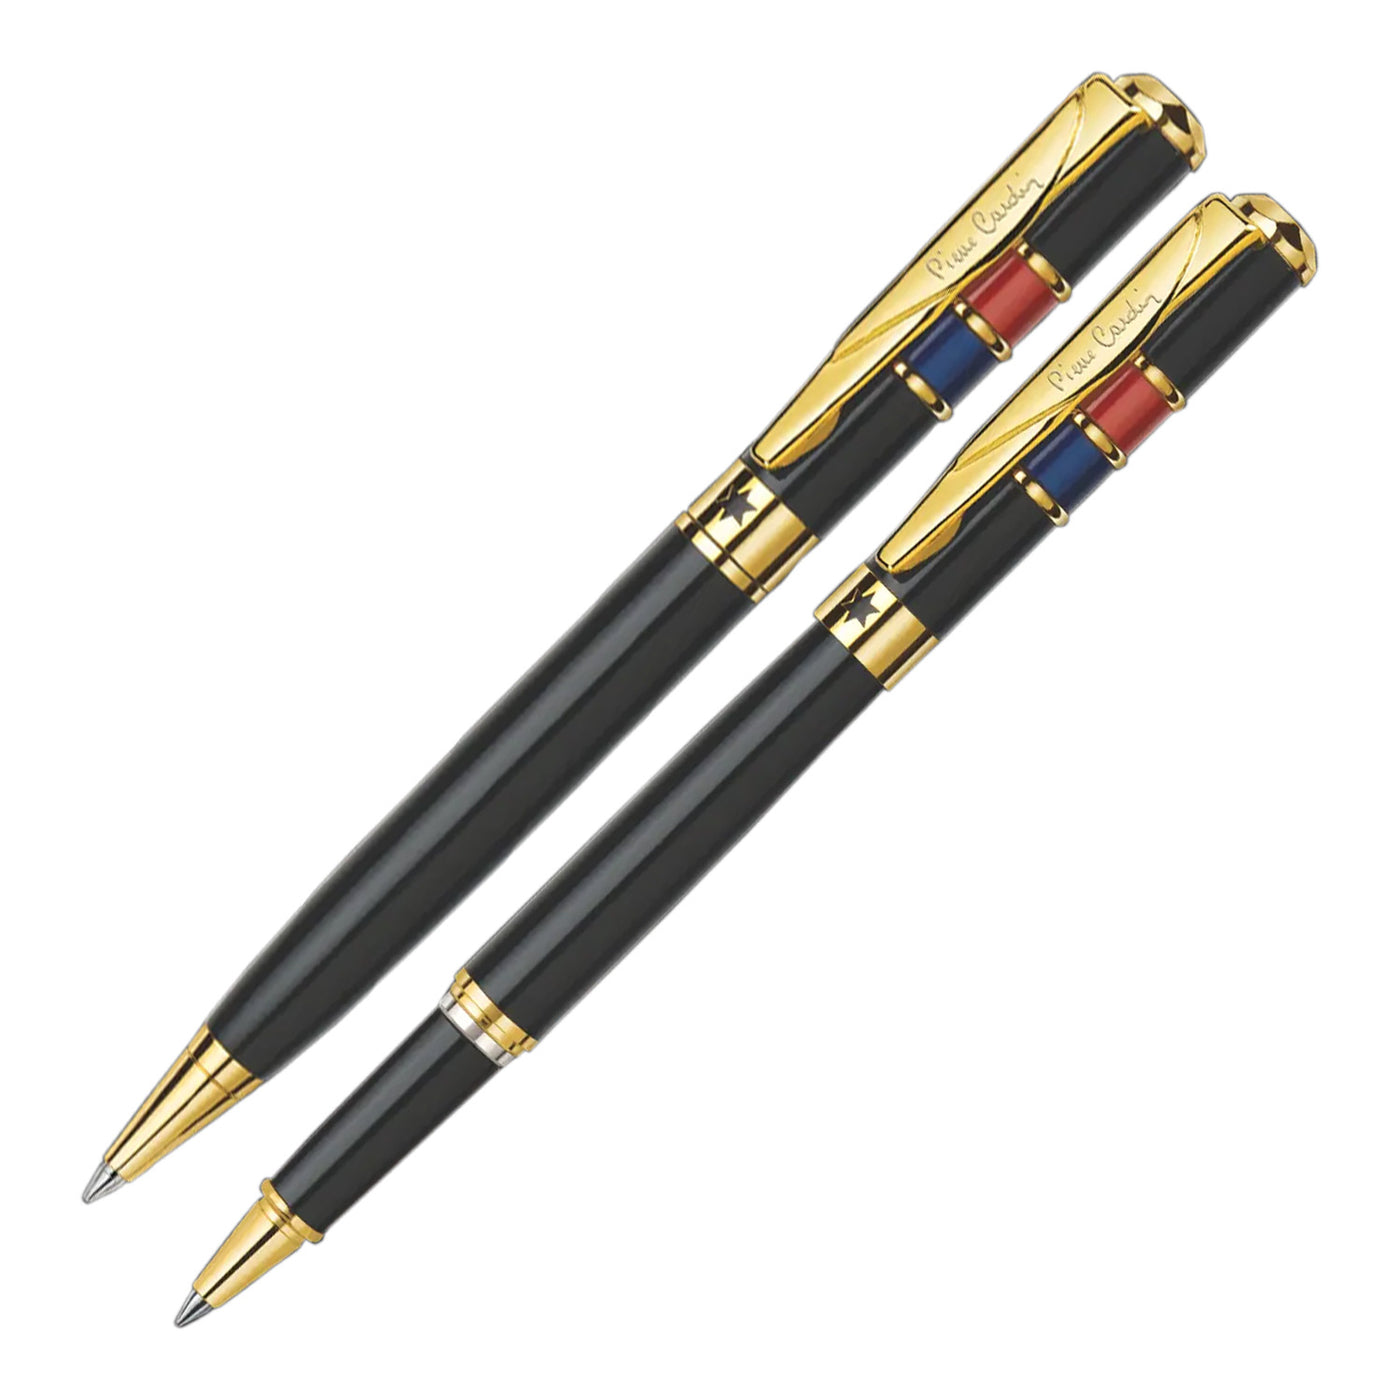 Pierre Cardin Prestige Gift Set of Notebook + Ball Pen + Roller Ball Pen + Key Ring